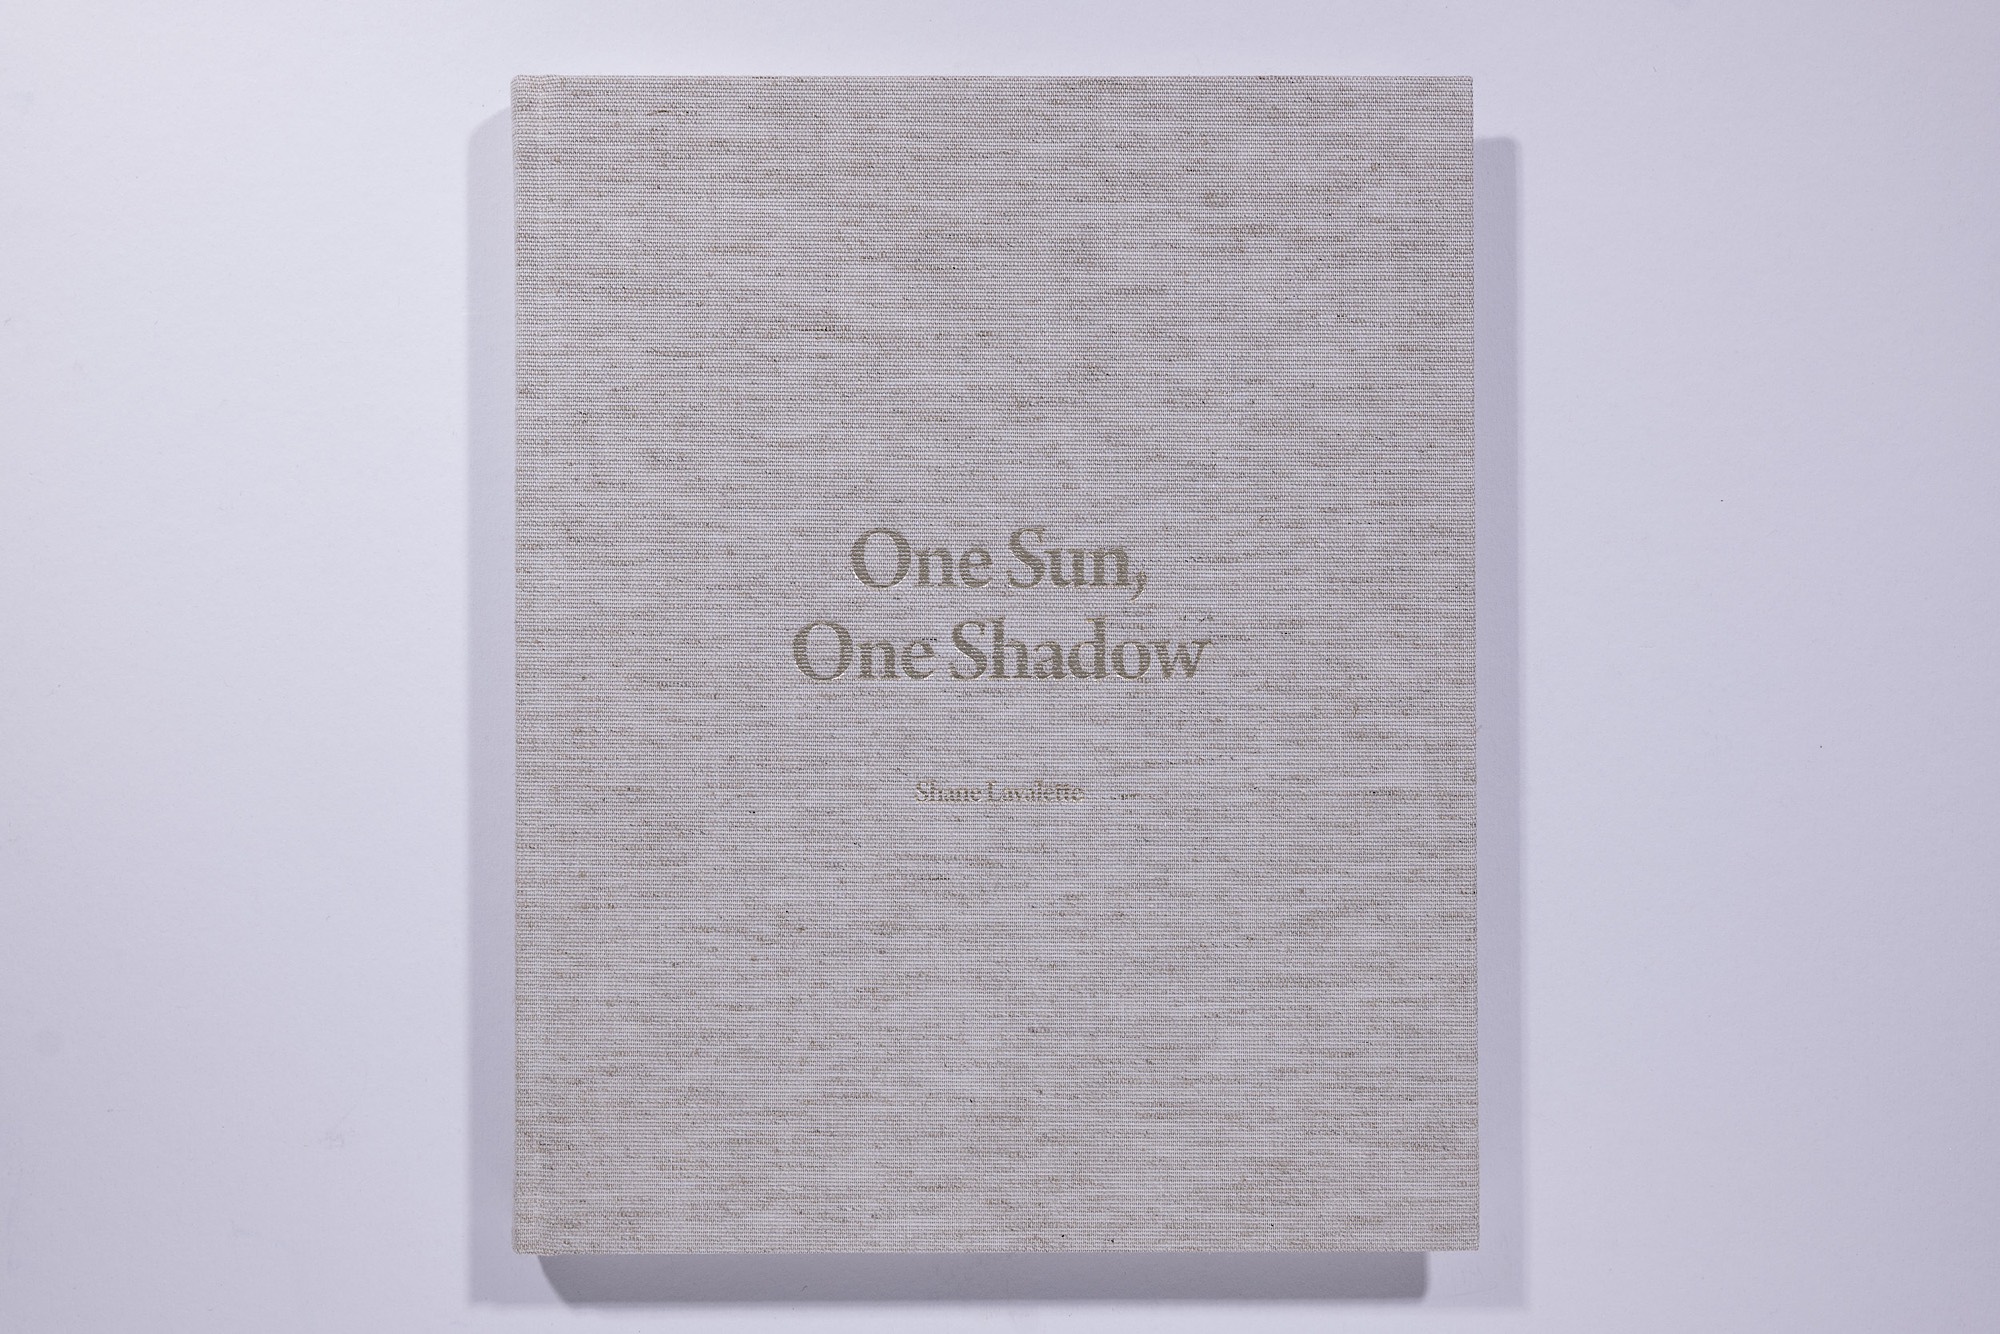 Shane Lavalette - One Sun, One Shadow Image 1